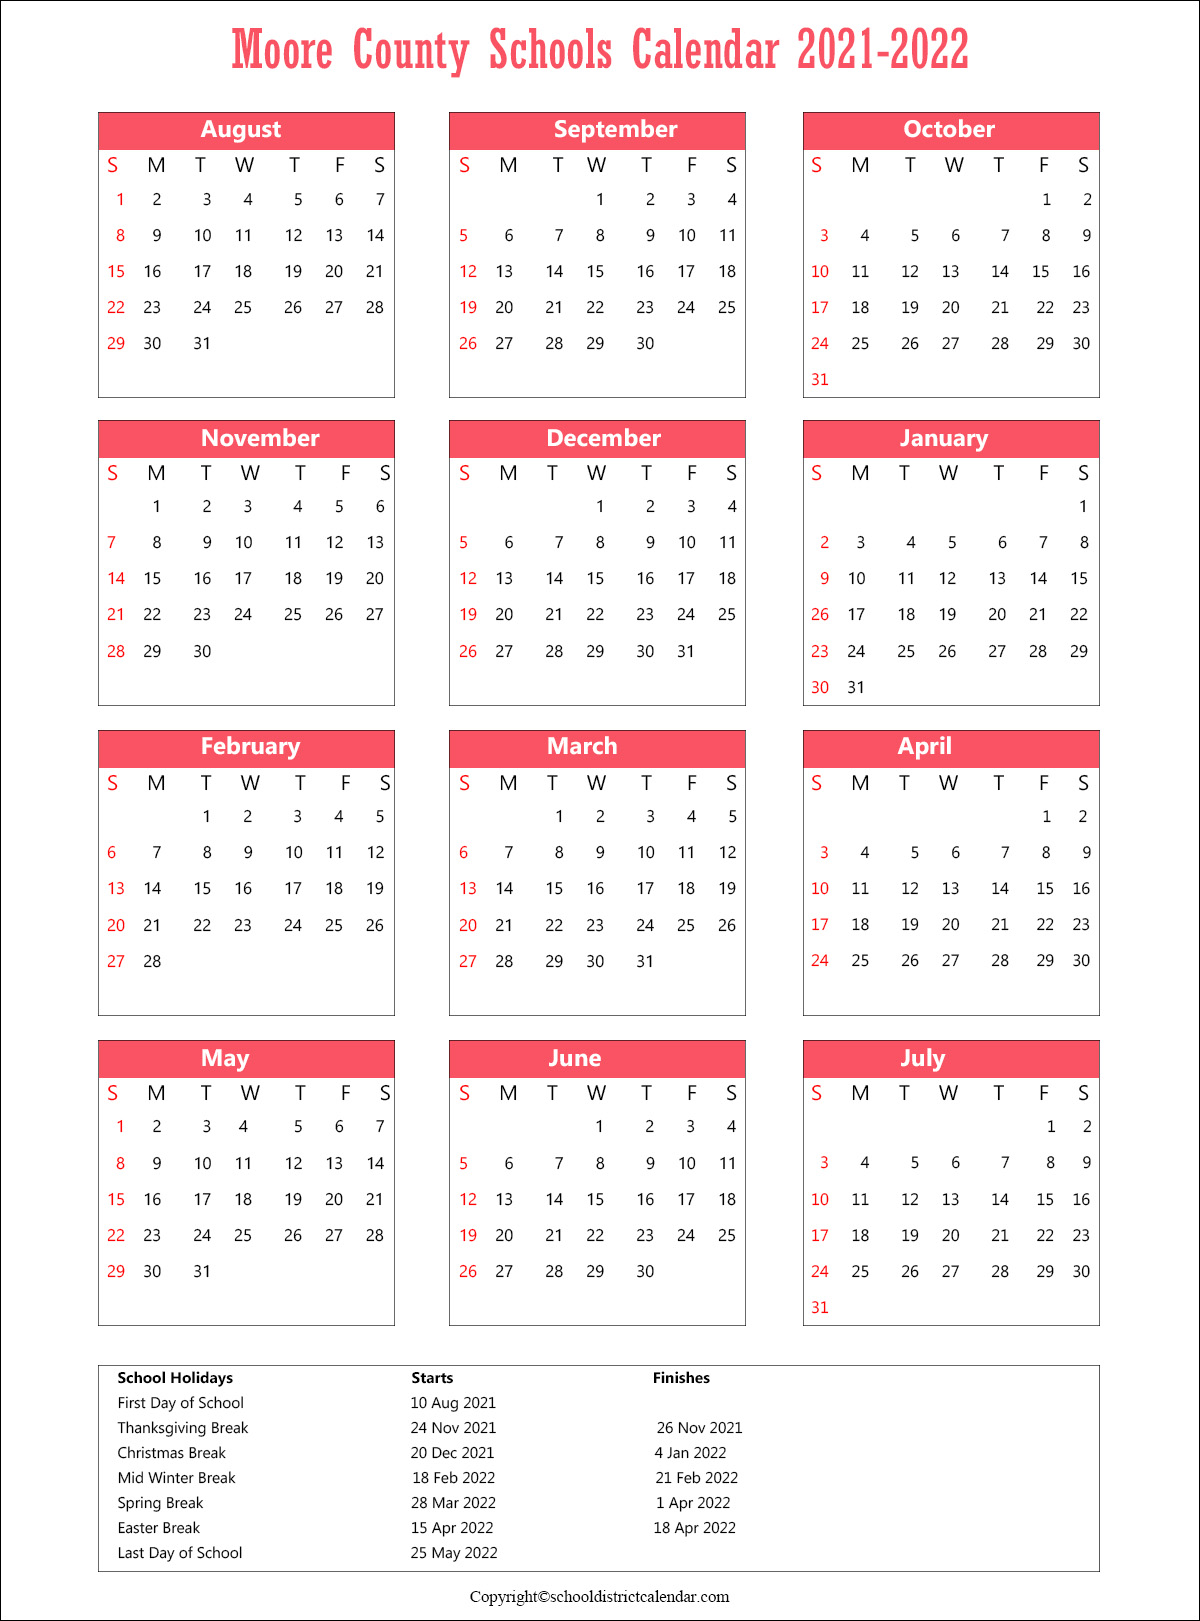 Moore County Schools Calendar, North Carolina Holidays 2021